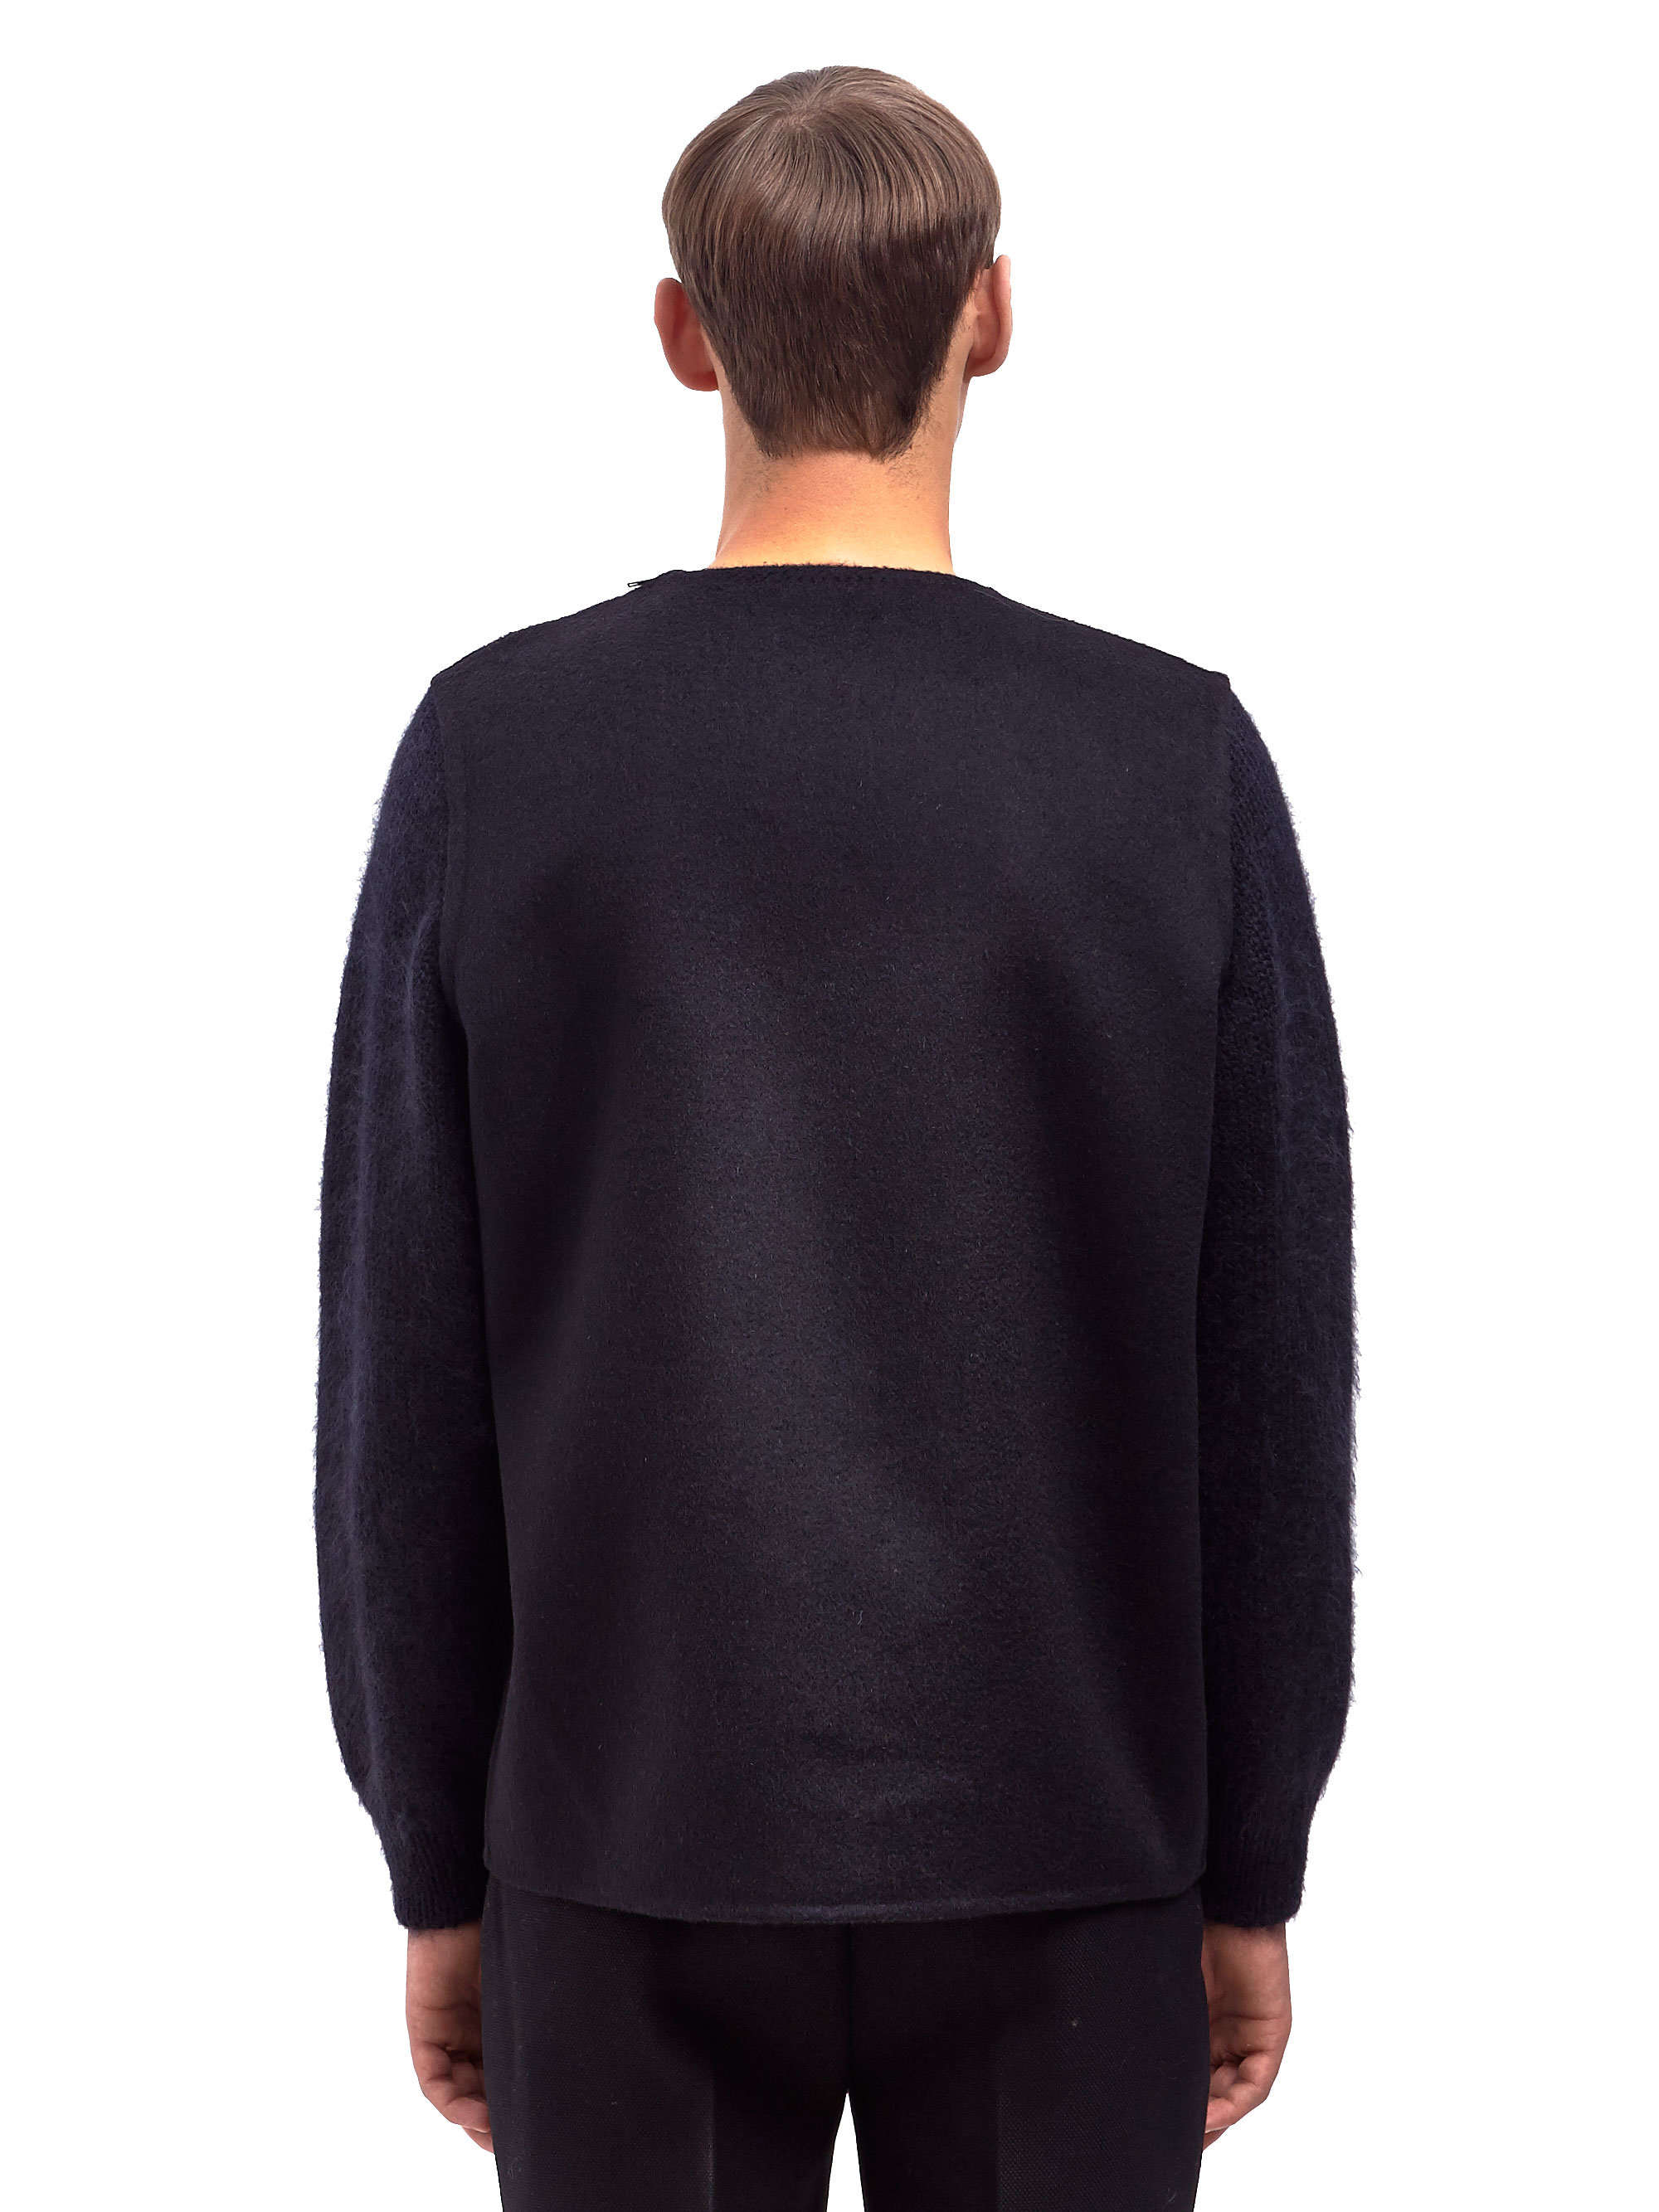 Lyst - Yang Li Mens Virgin Wool Crew Neck Sweater in Black for Men